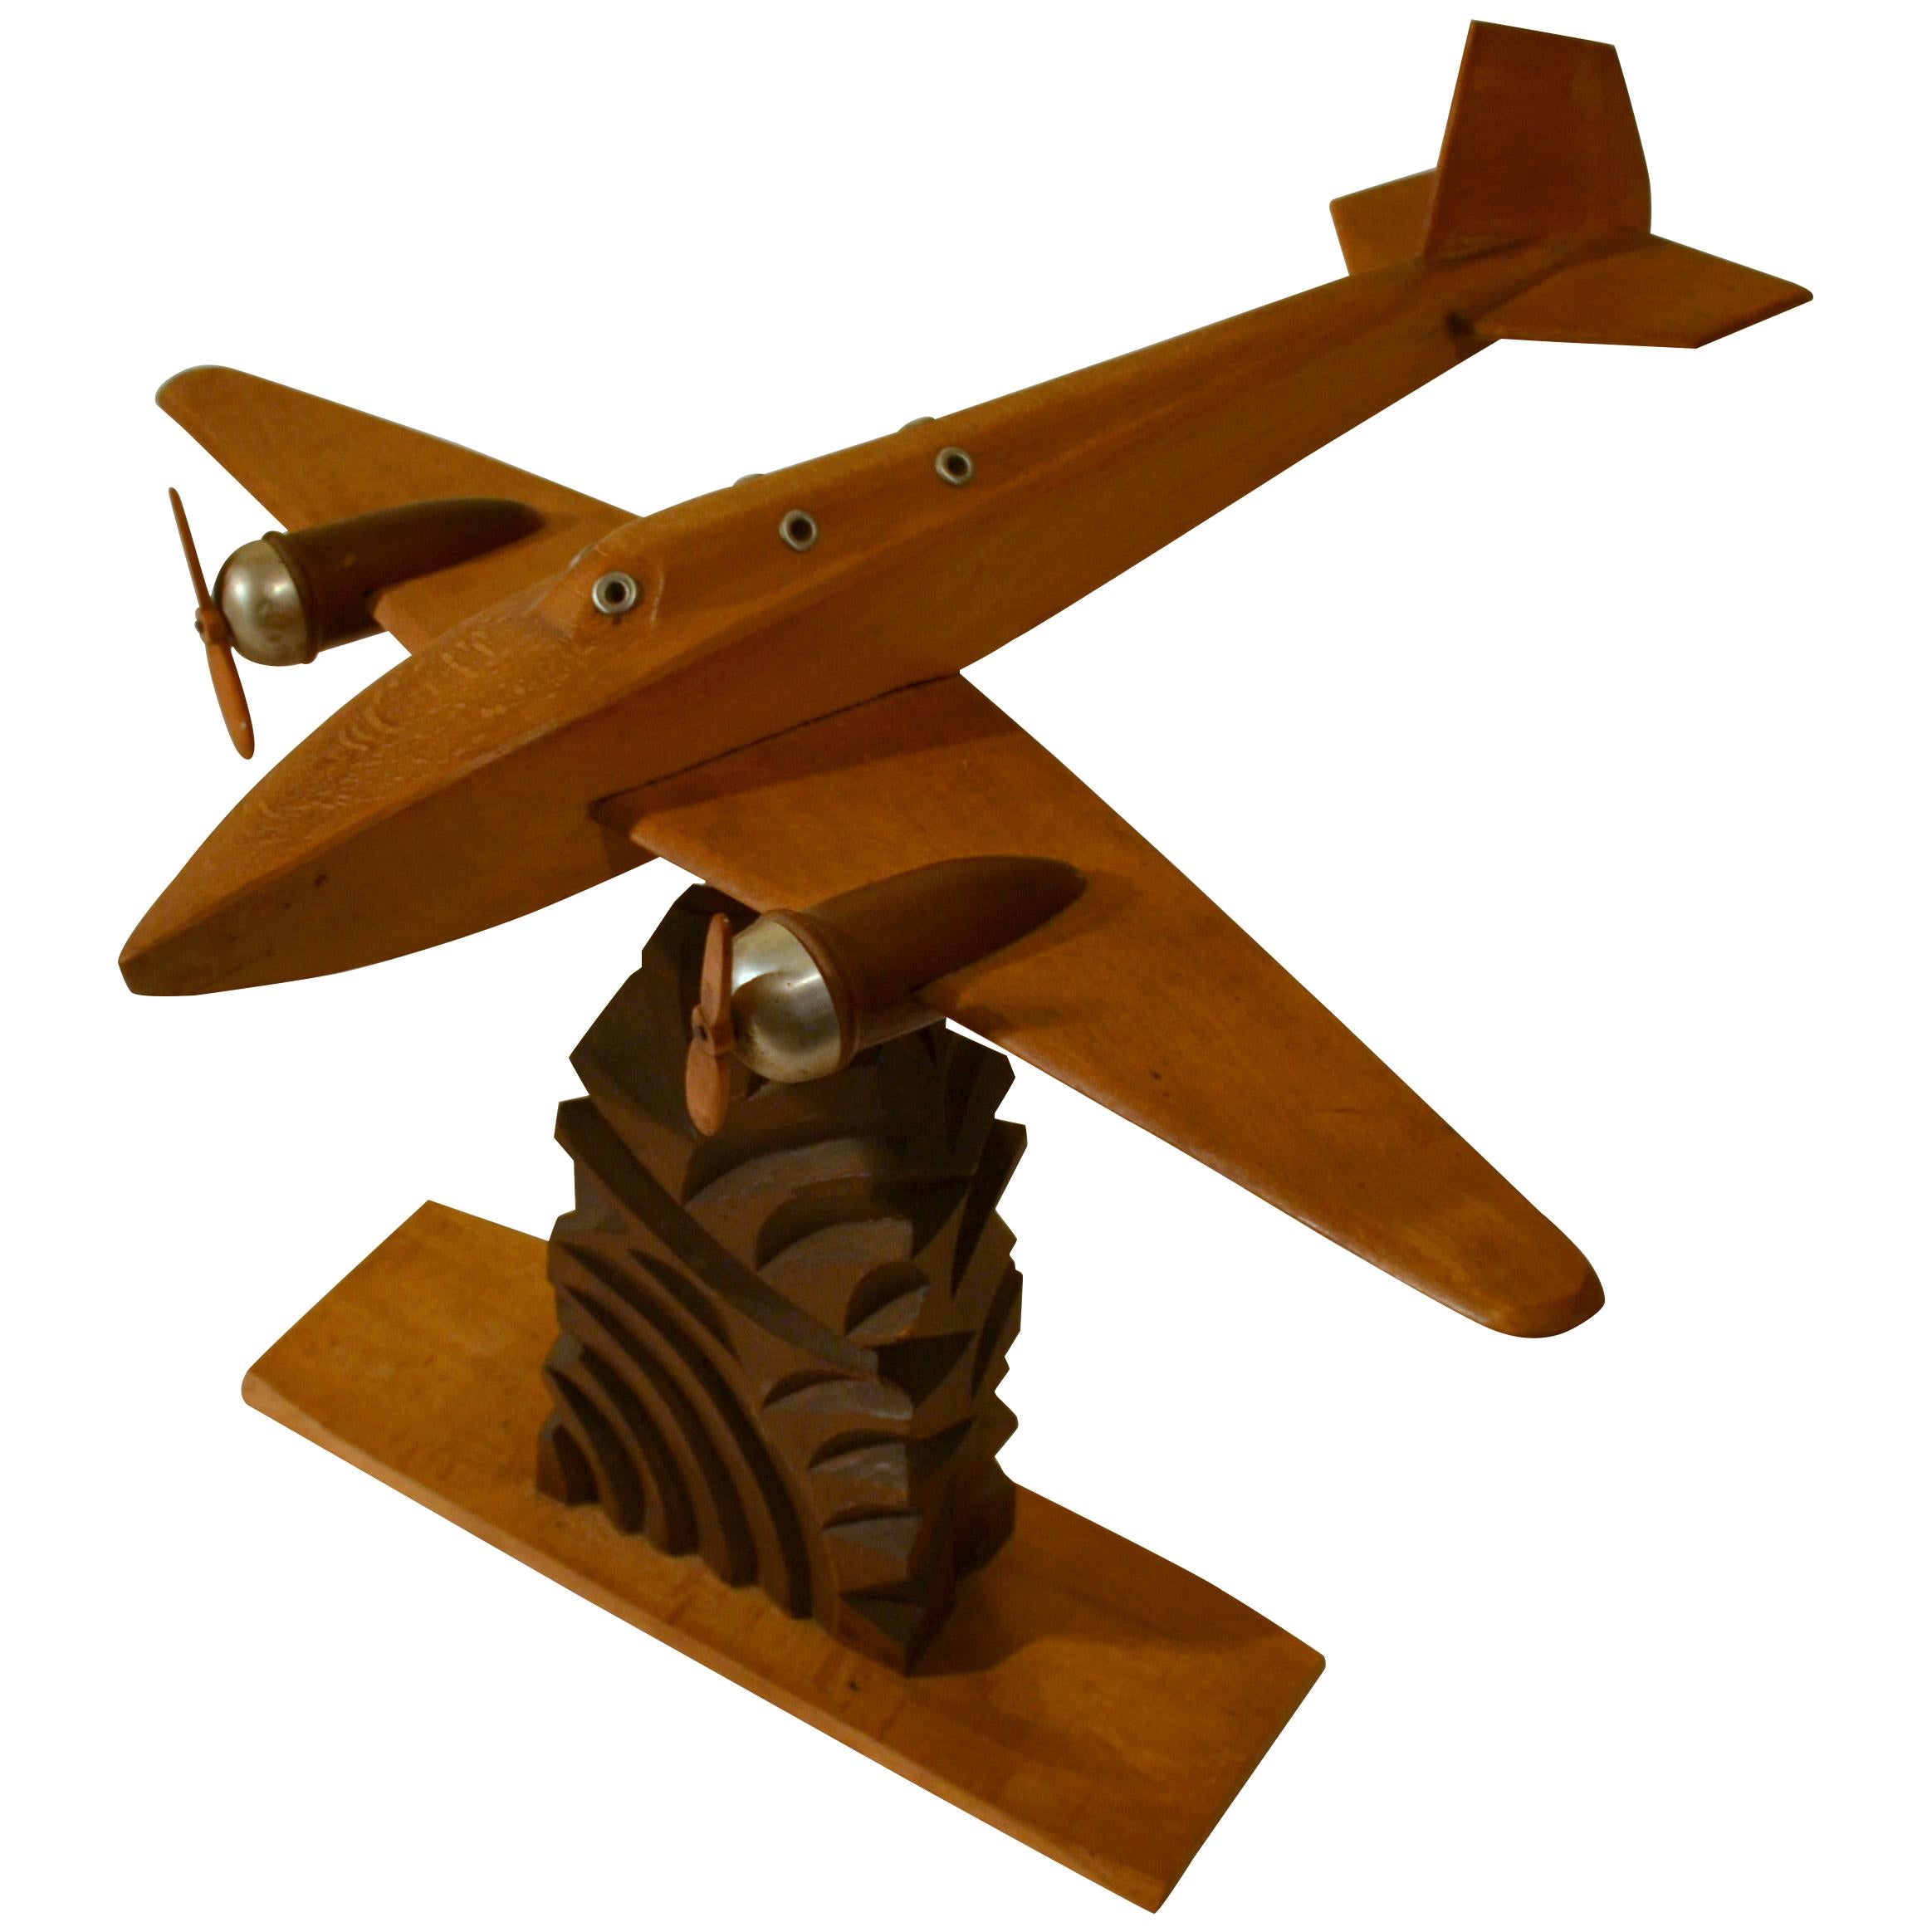 1950s Wooden Airplane Model Sculpture